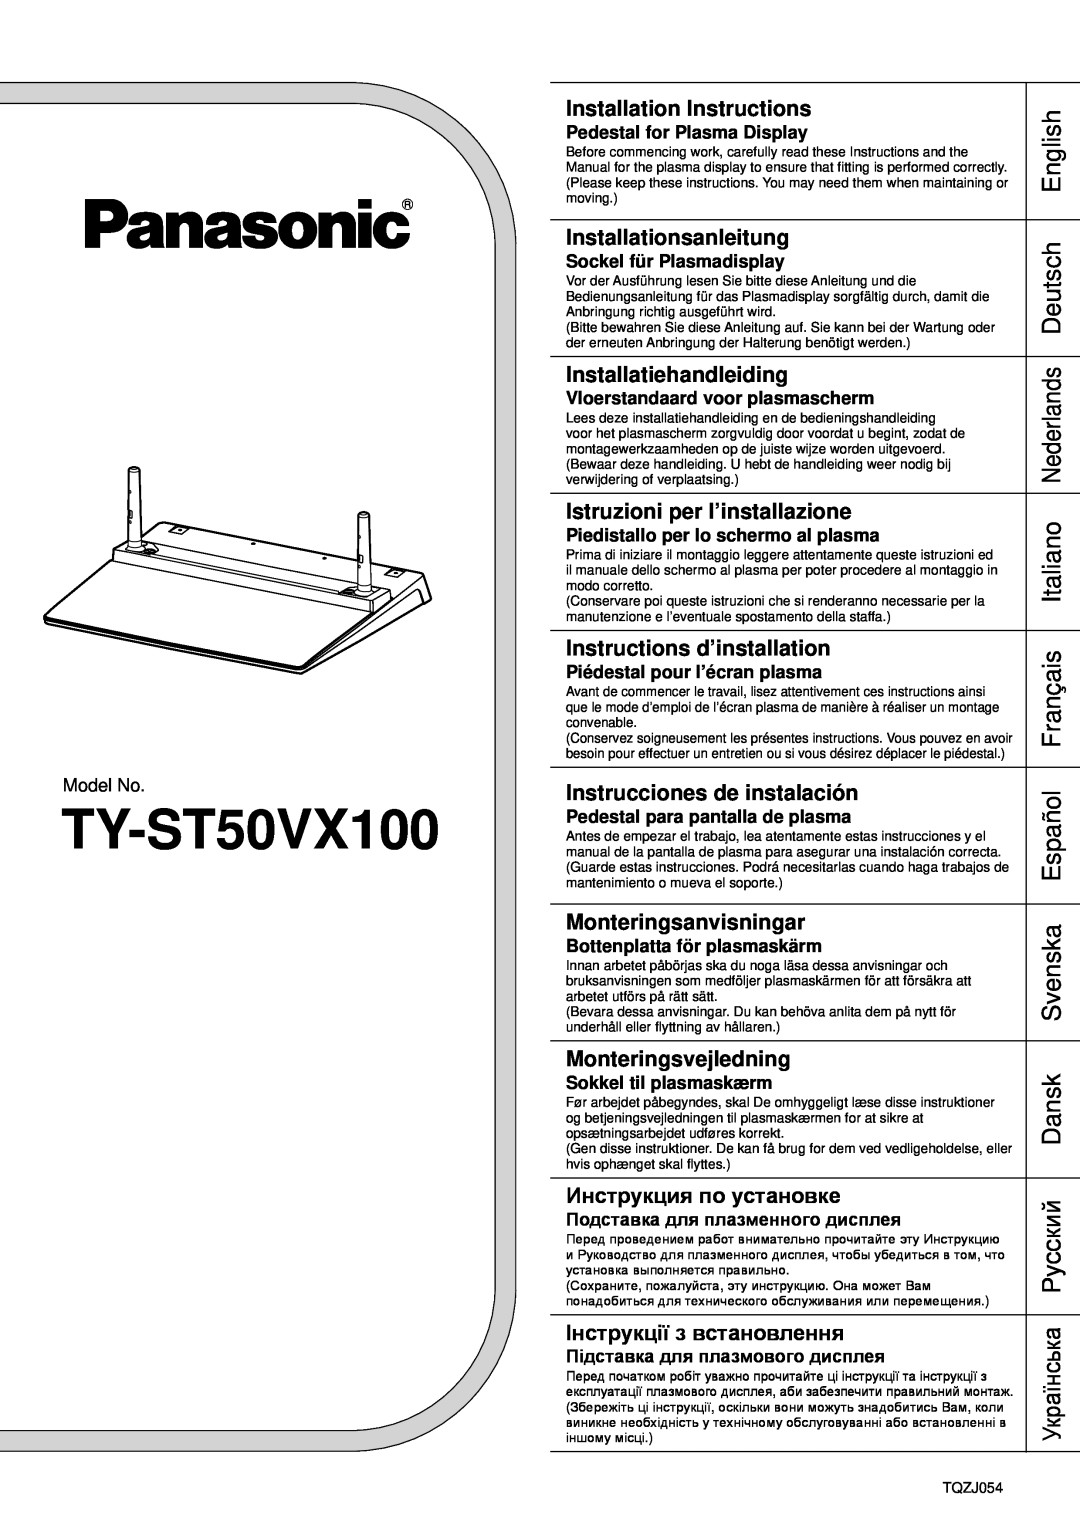 Panasonic TY-ST50VX100 installation instructions 